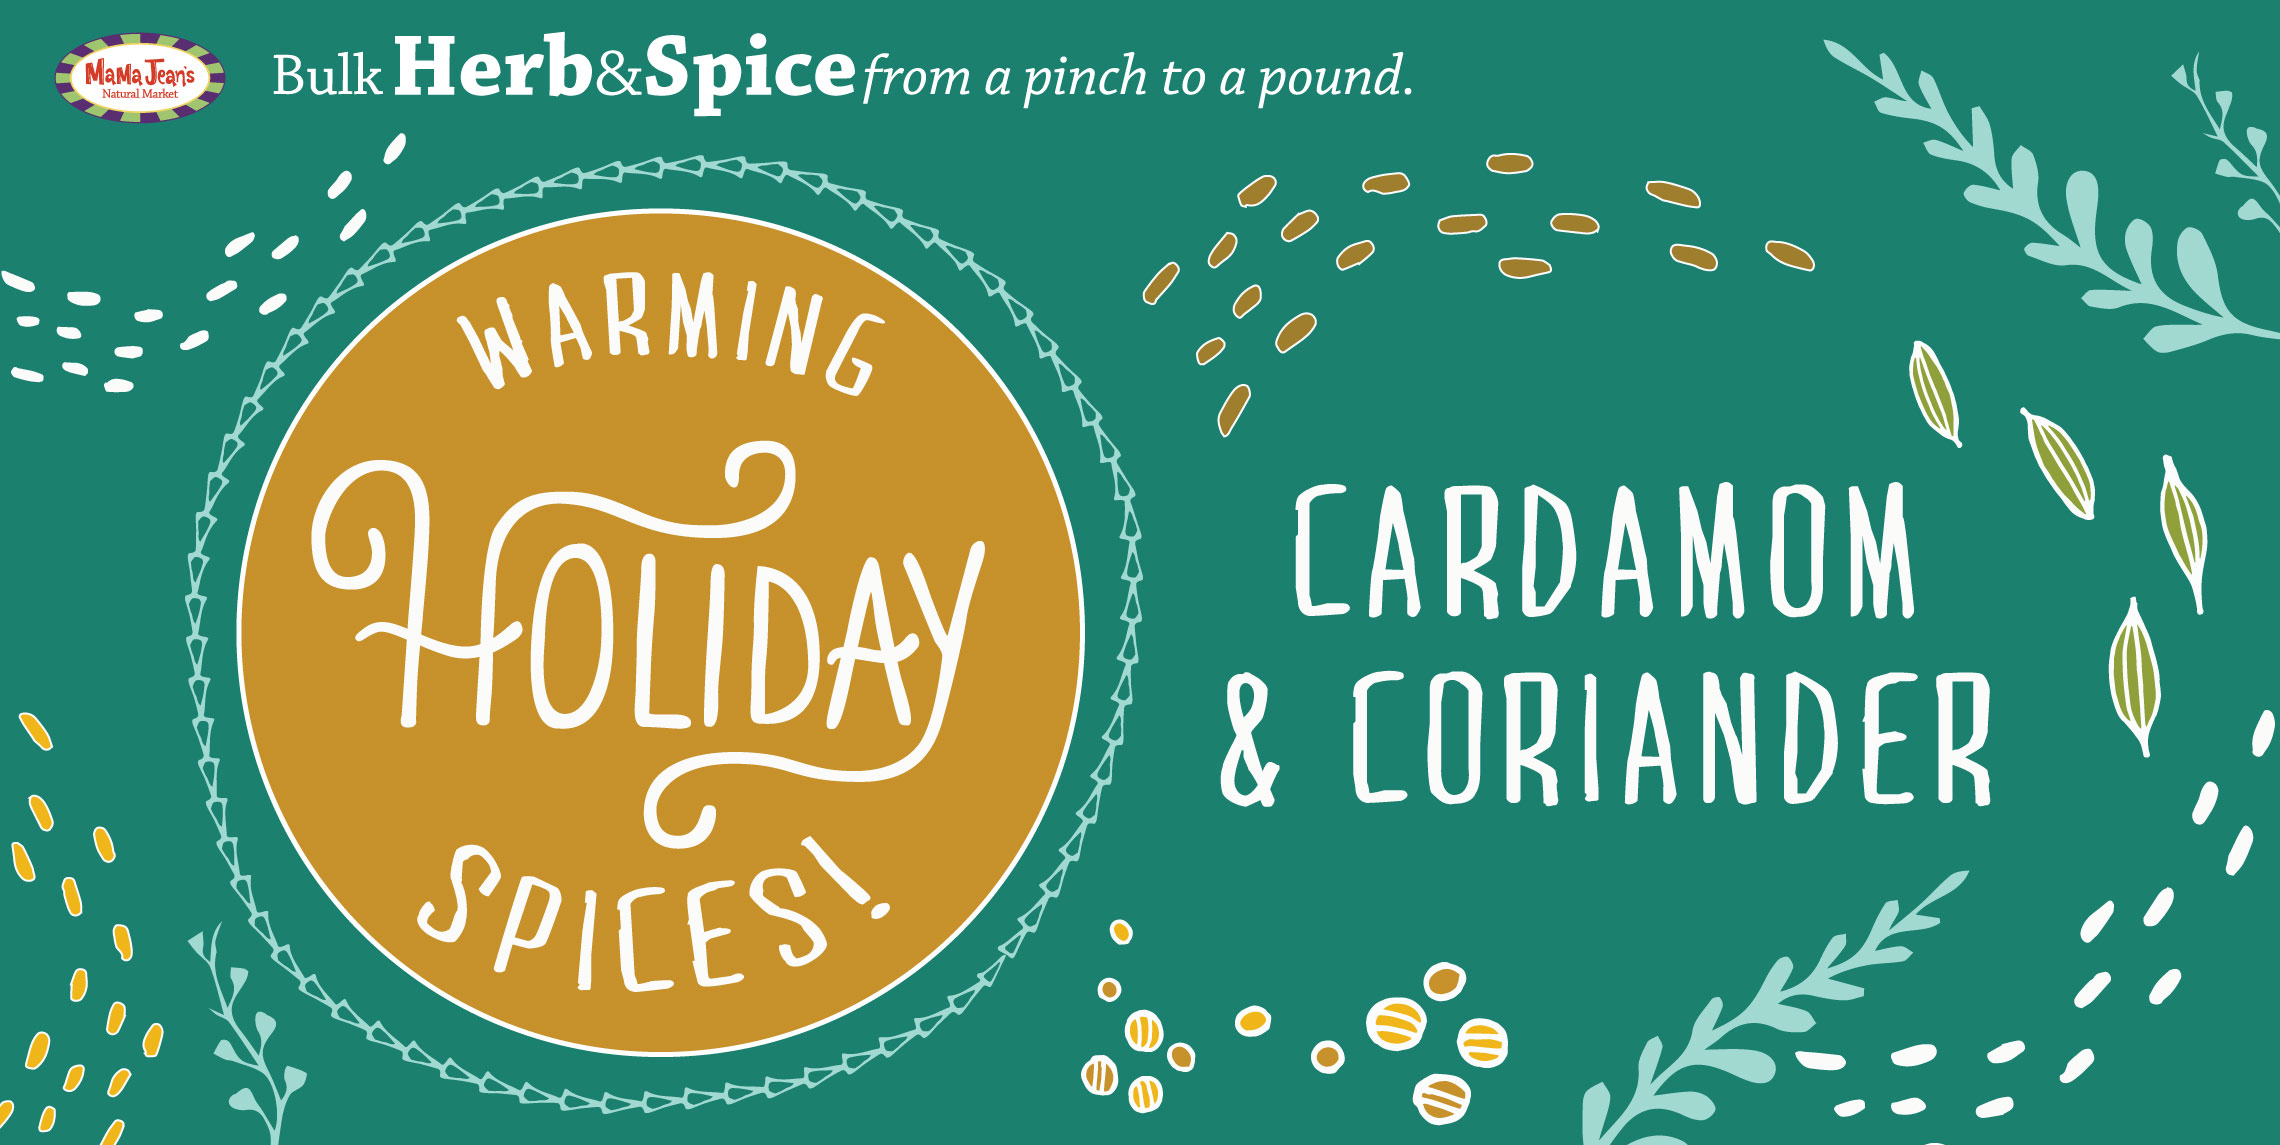 Herb & Spice Coriander and Cardamom